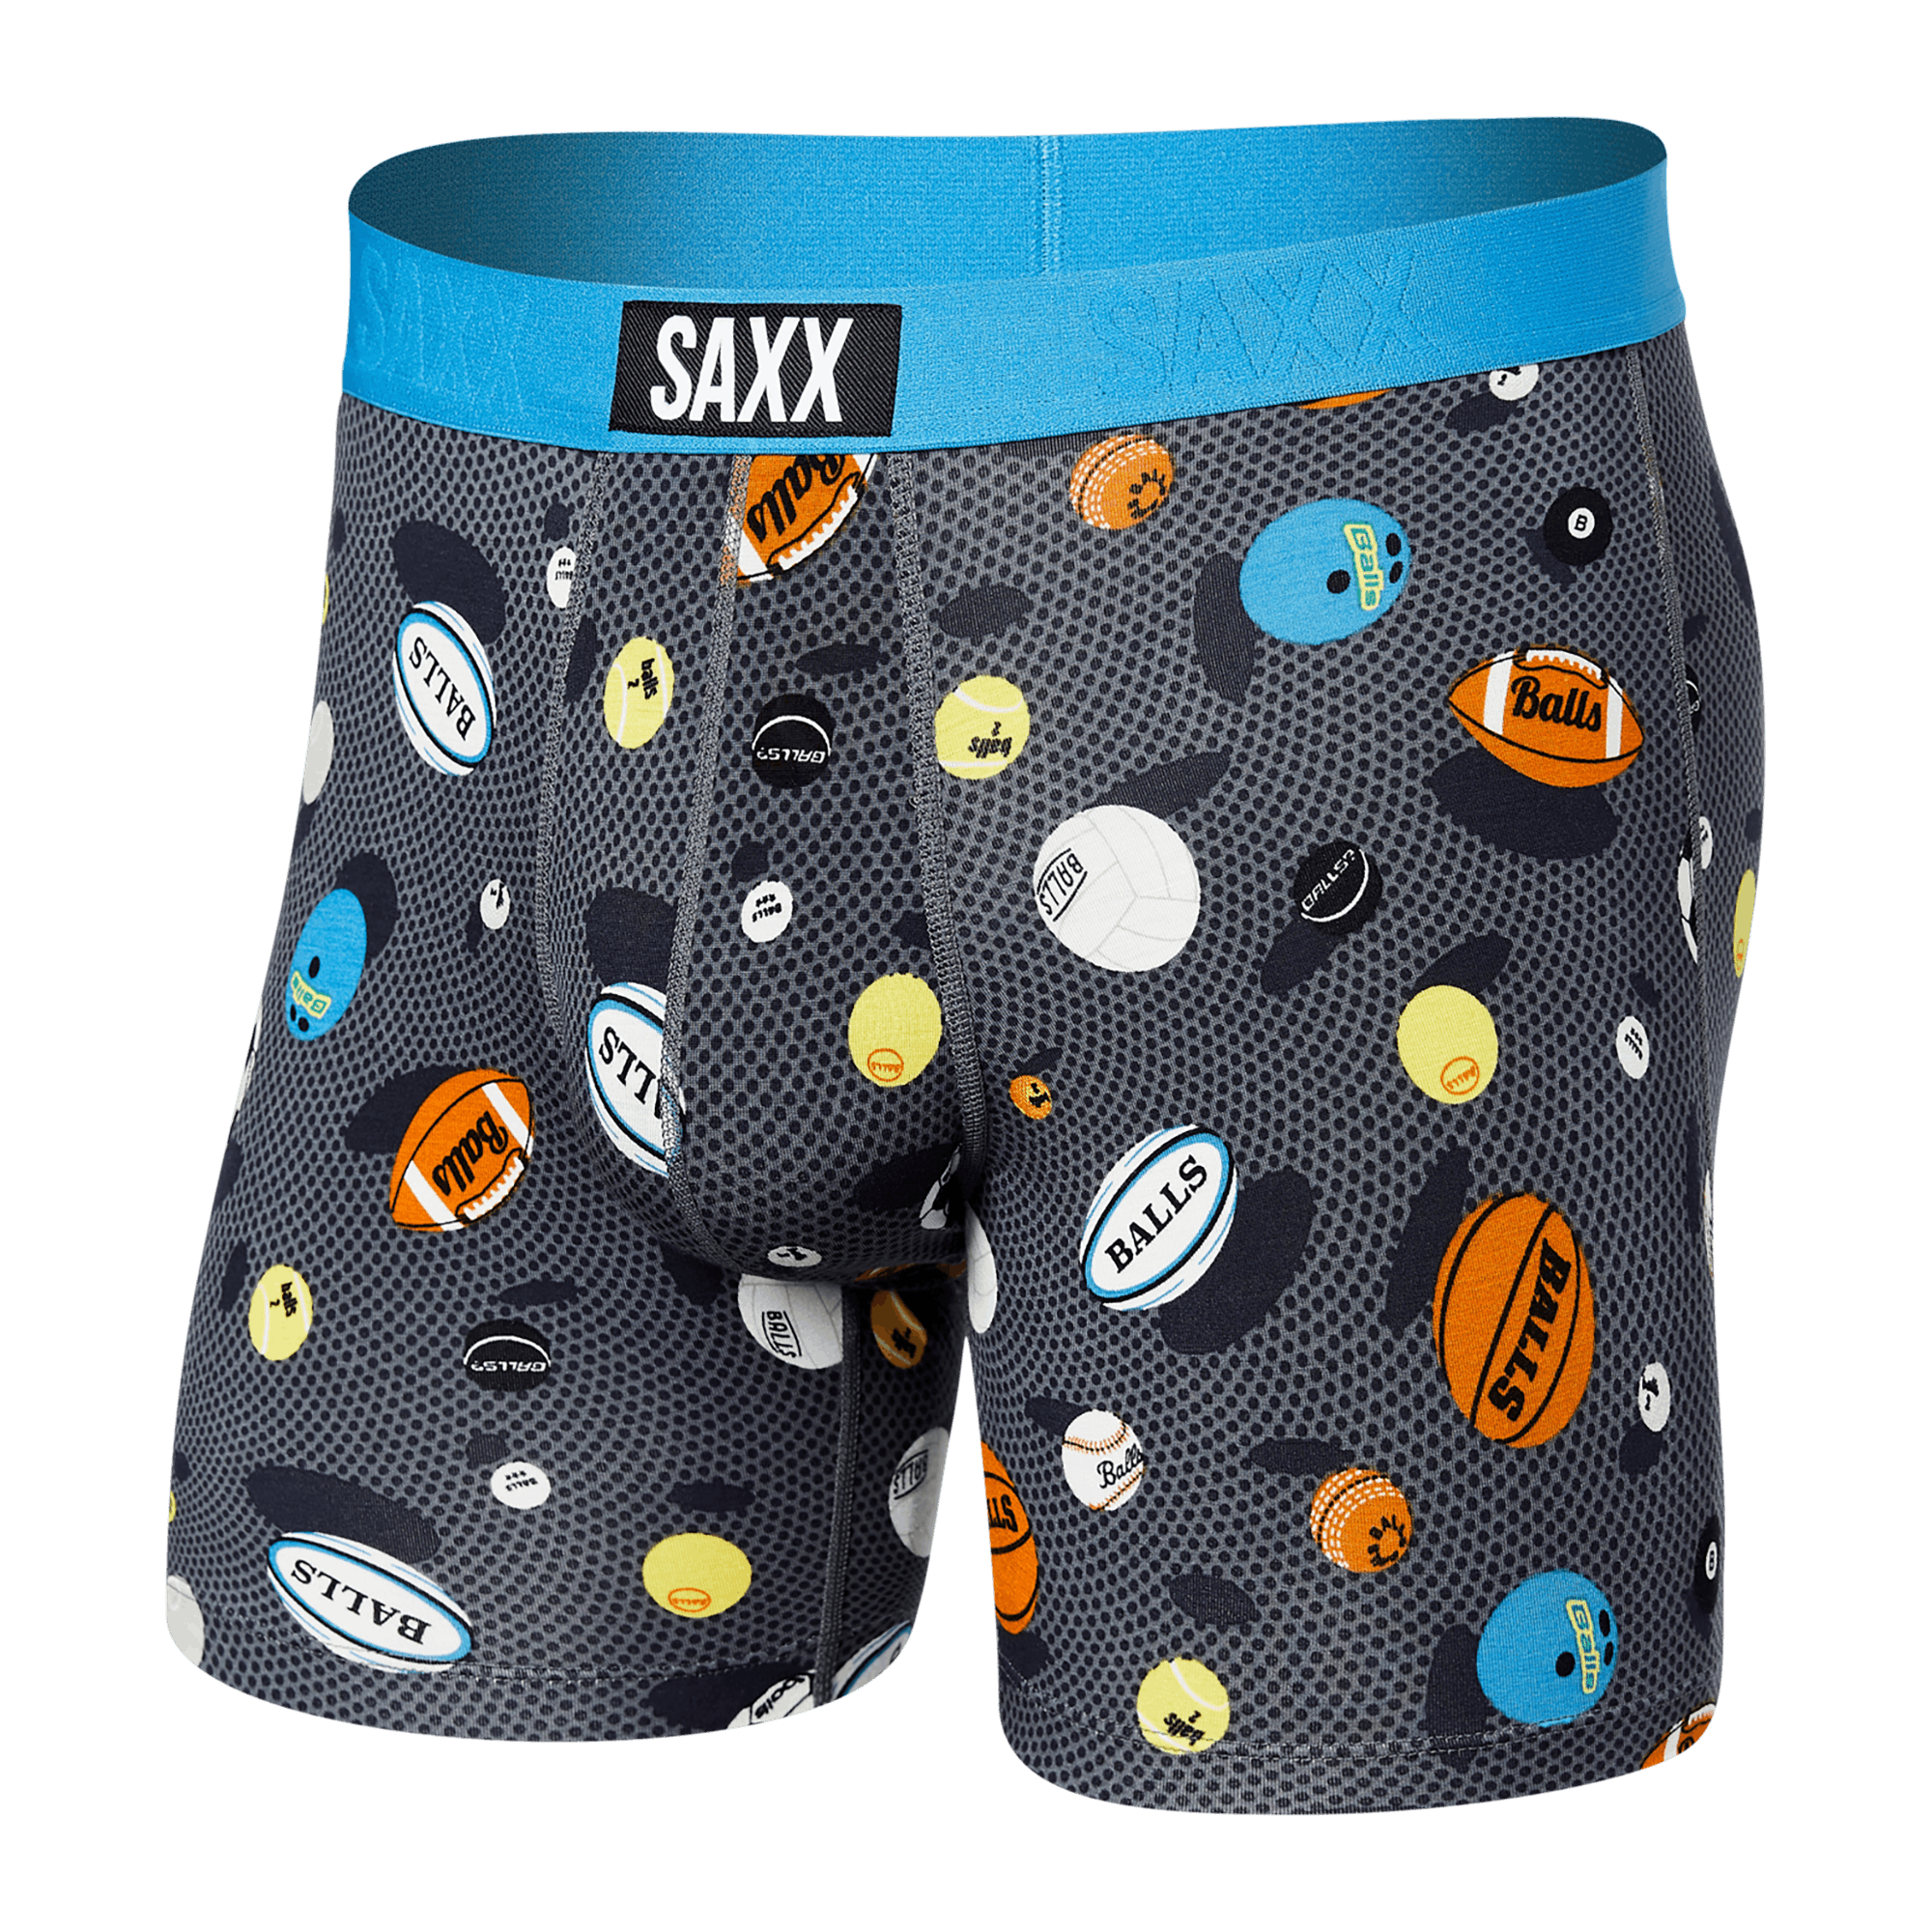 SAXX Vibe boxer Brief Balls to the walls